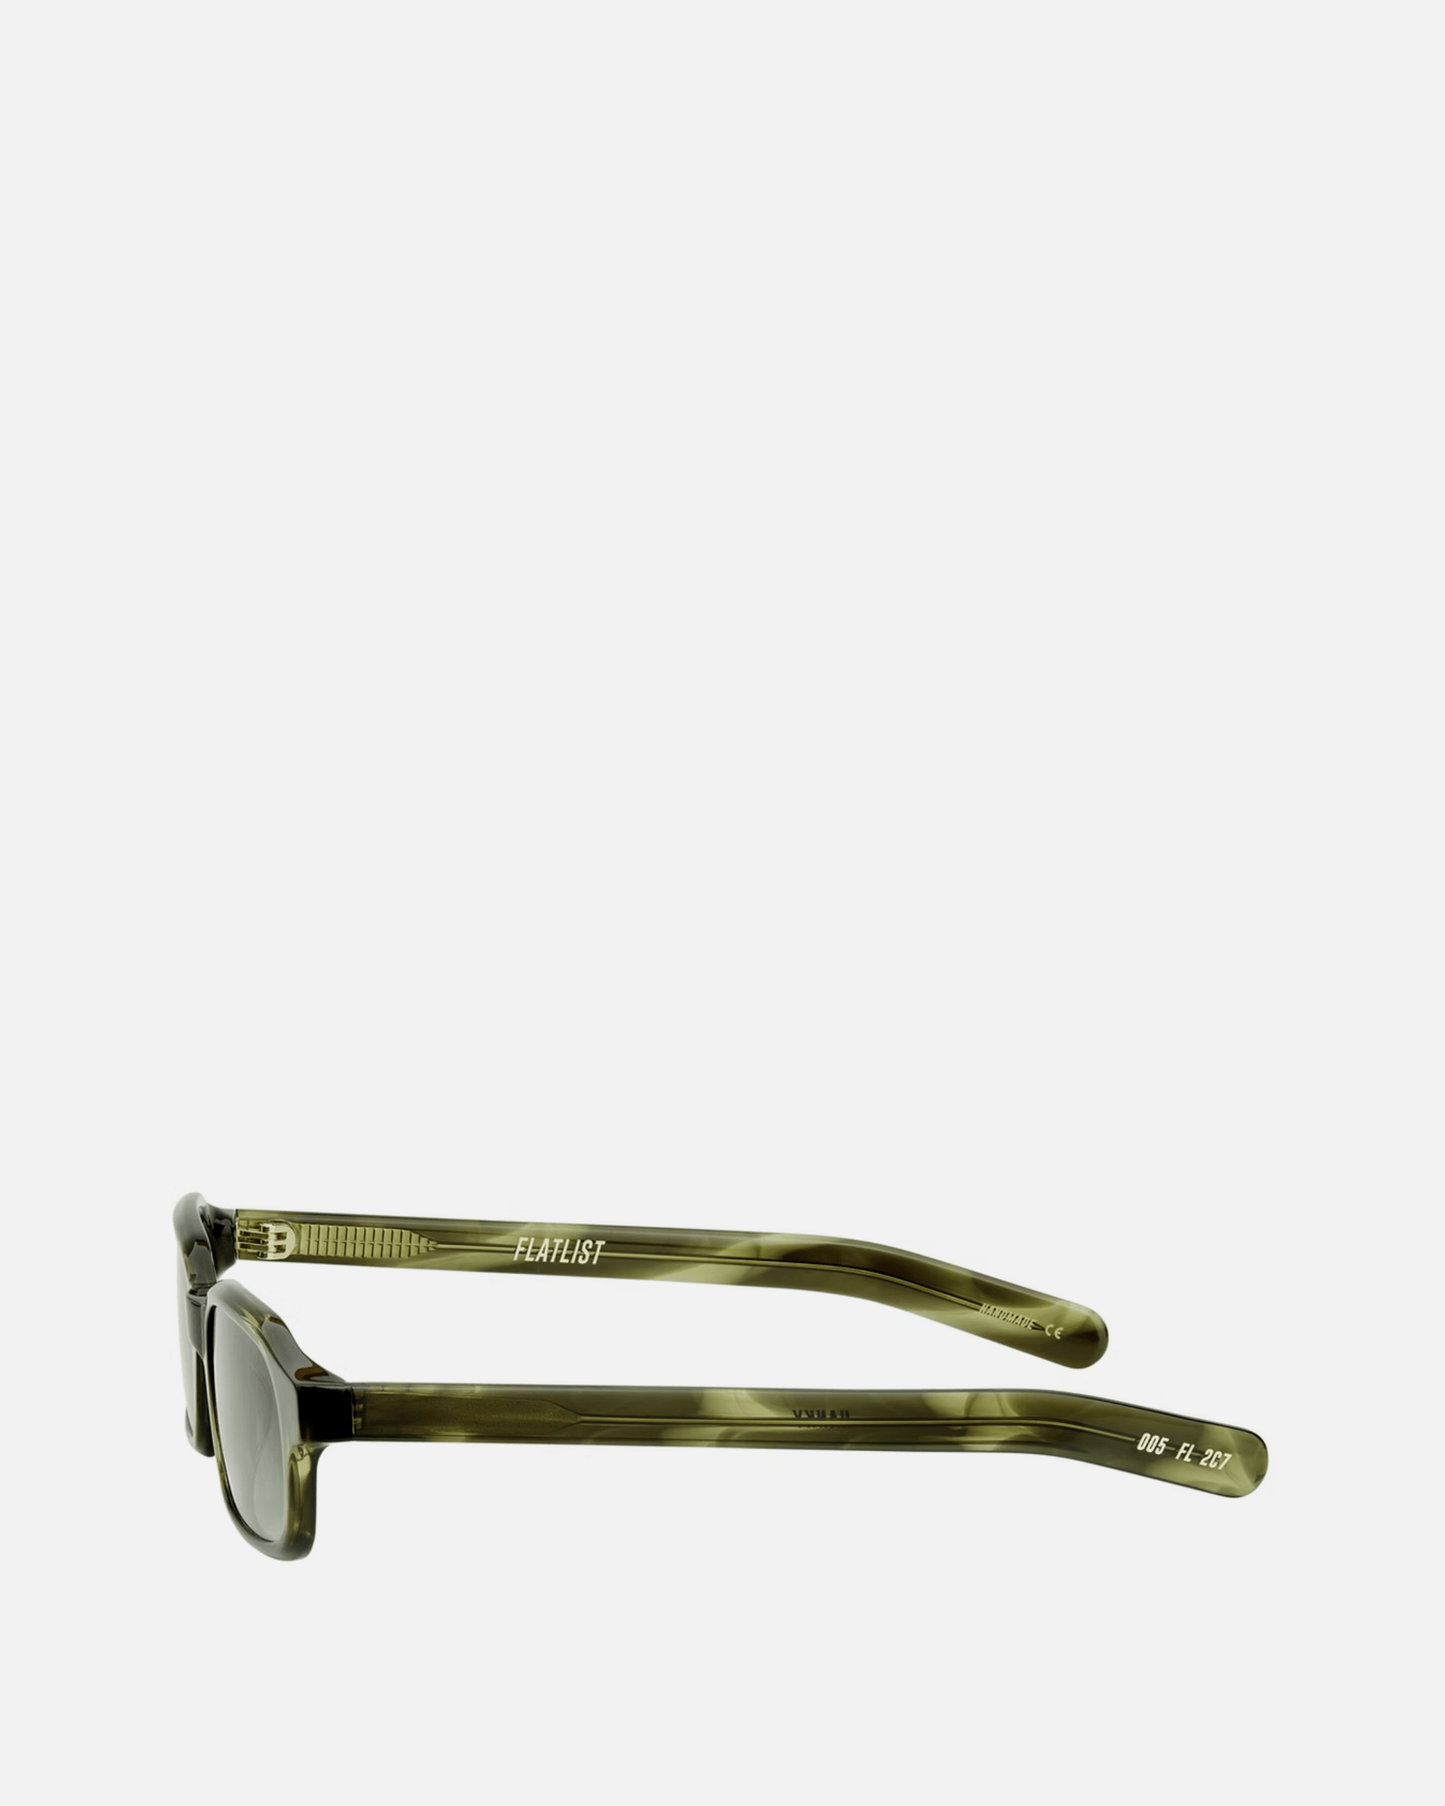 FLATLIST EYEWEAR Eyewear Hanky in Olive Horn/Olive Gradient Lens